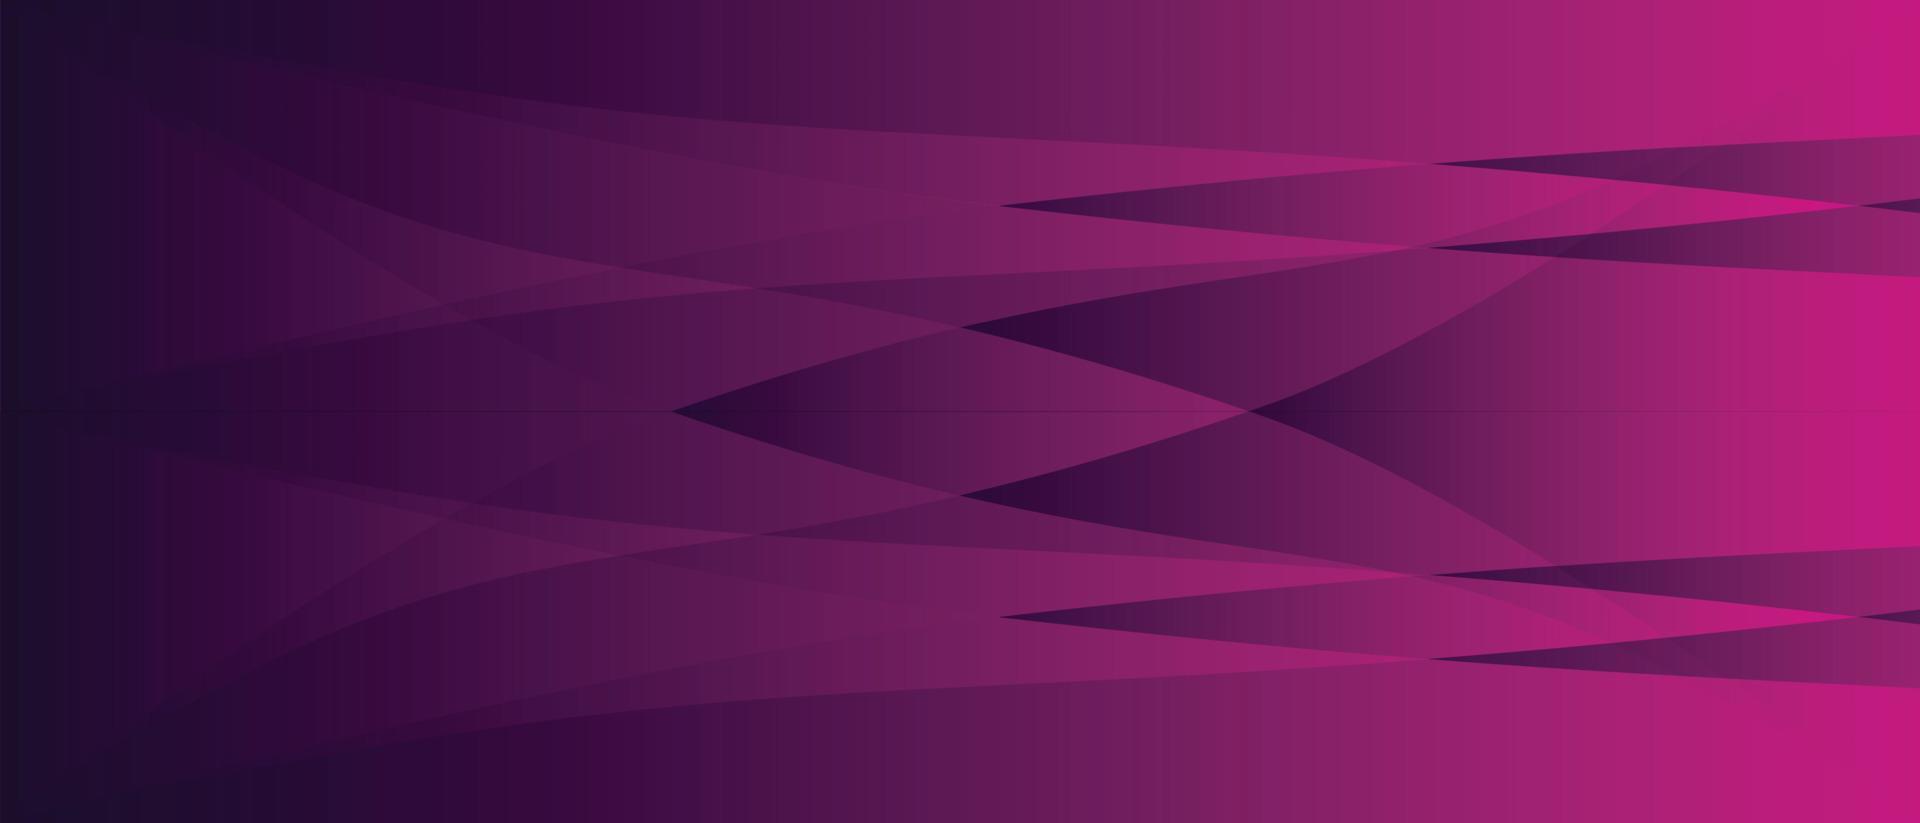 mörk rosa konst baner bakgrund vektor illustration